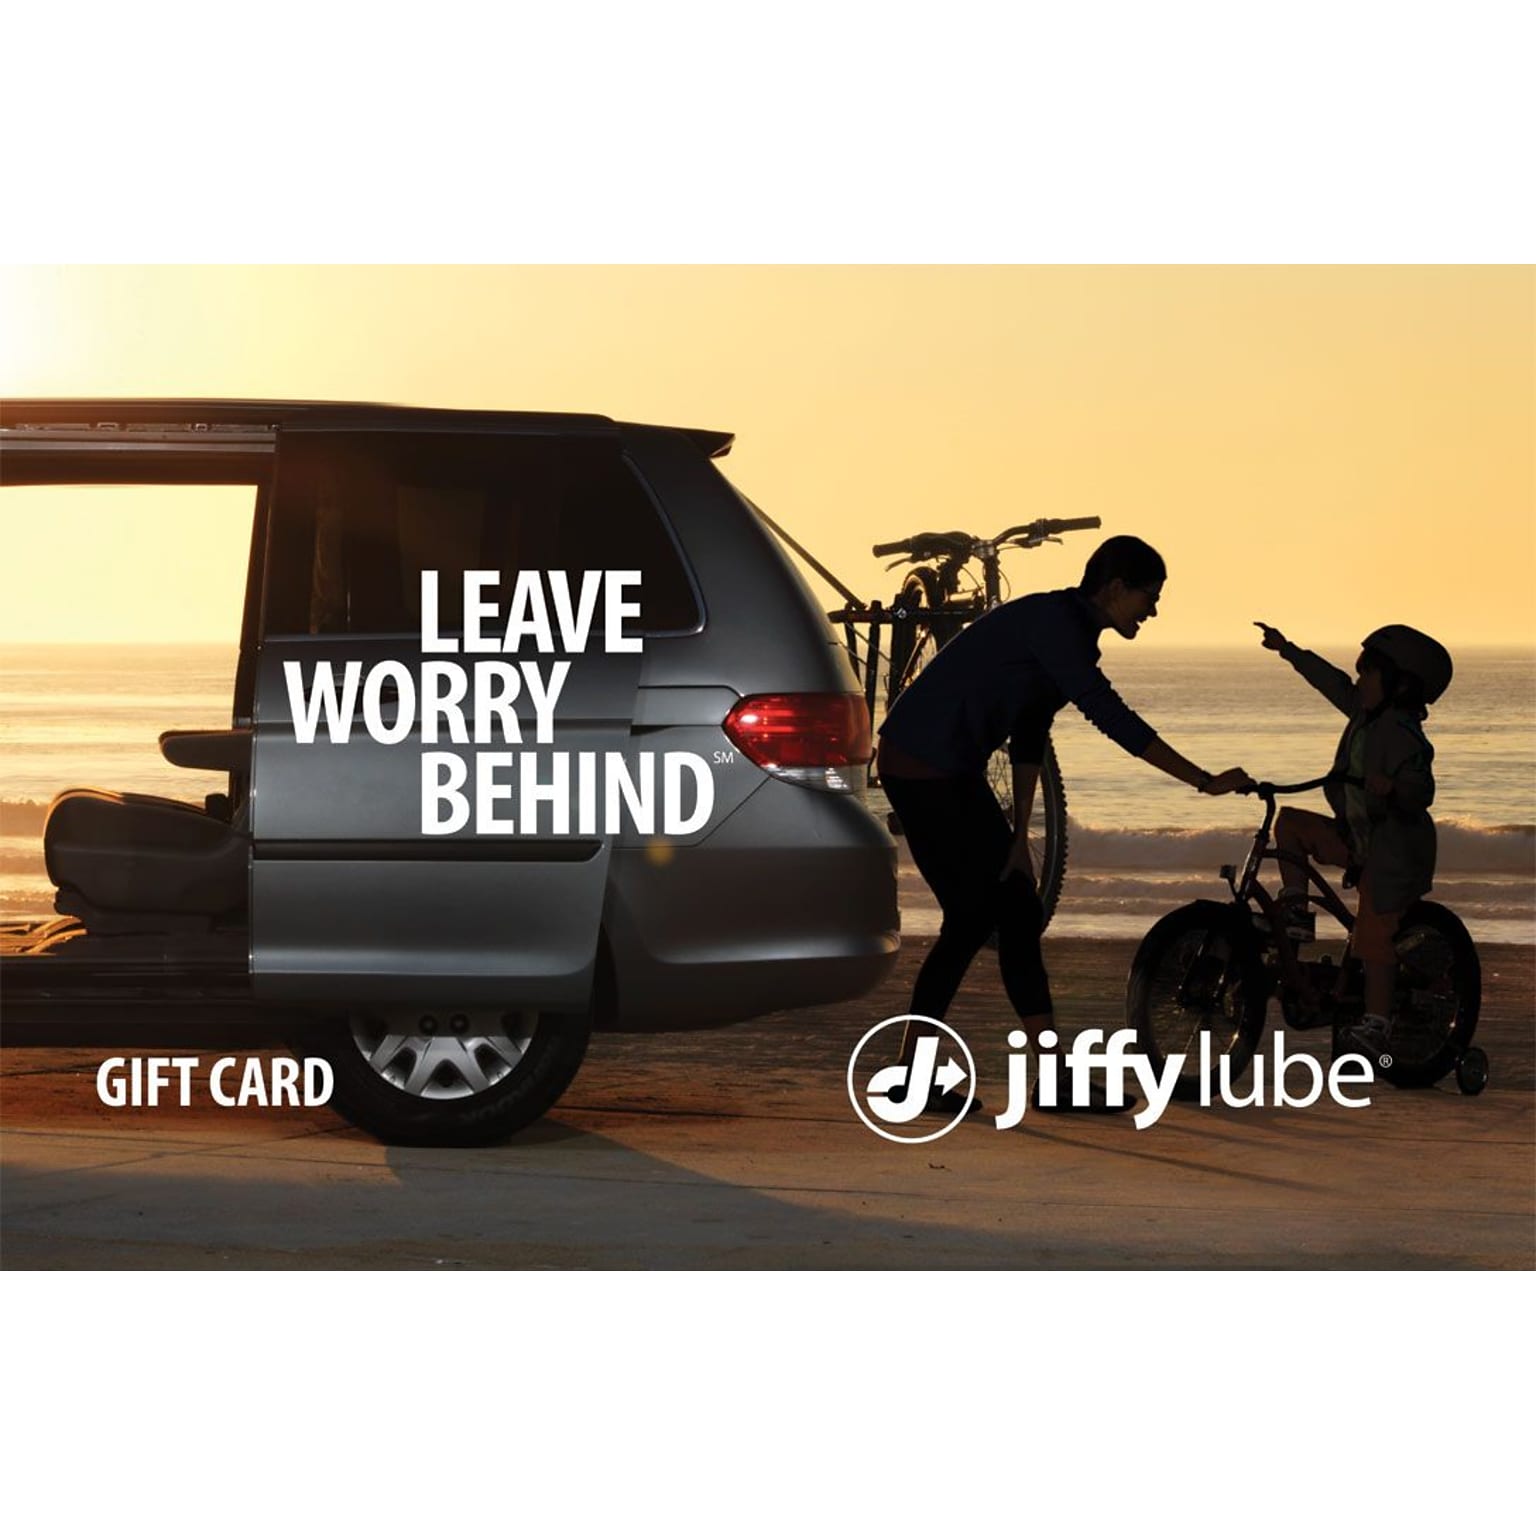 Jiffy Lube Gift Card $100